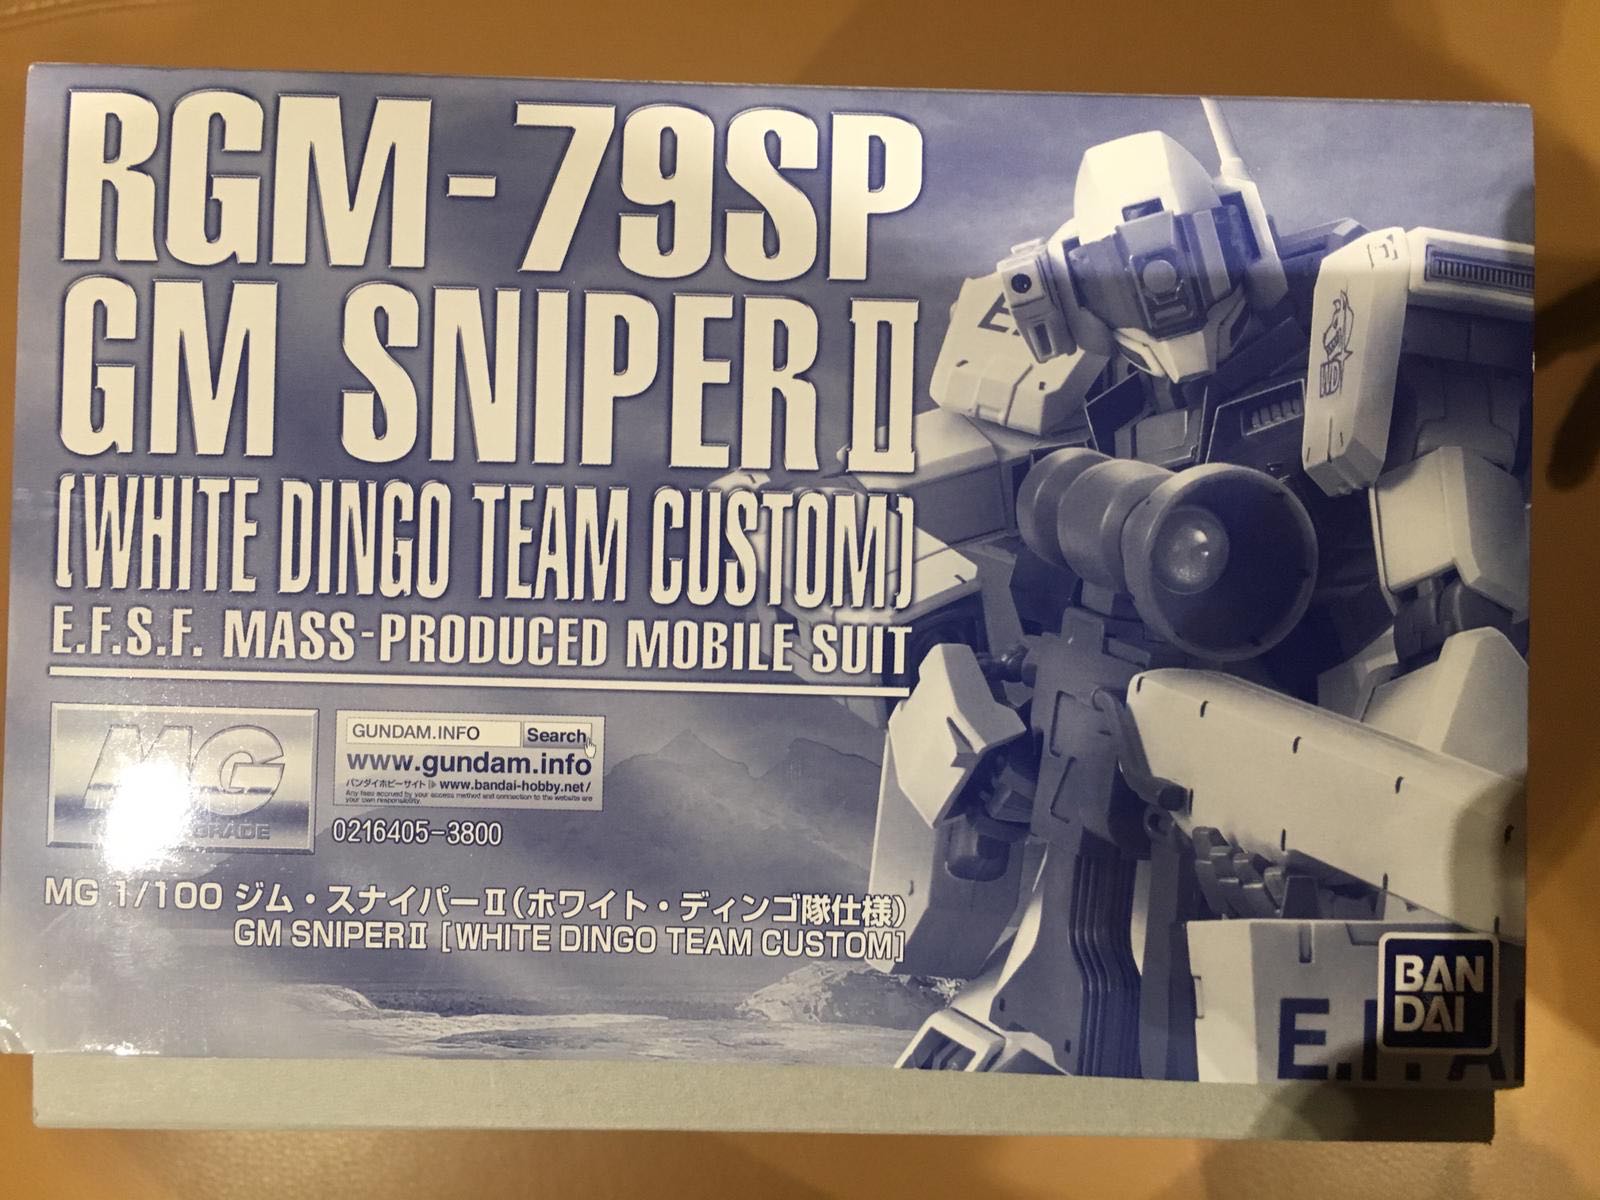 Bandai Rgm 79sp Mg 1100 Gm Sniper Ii White Dingo Team Custom